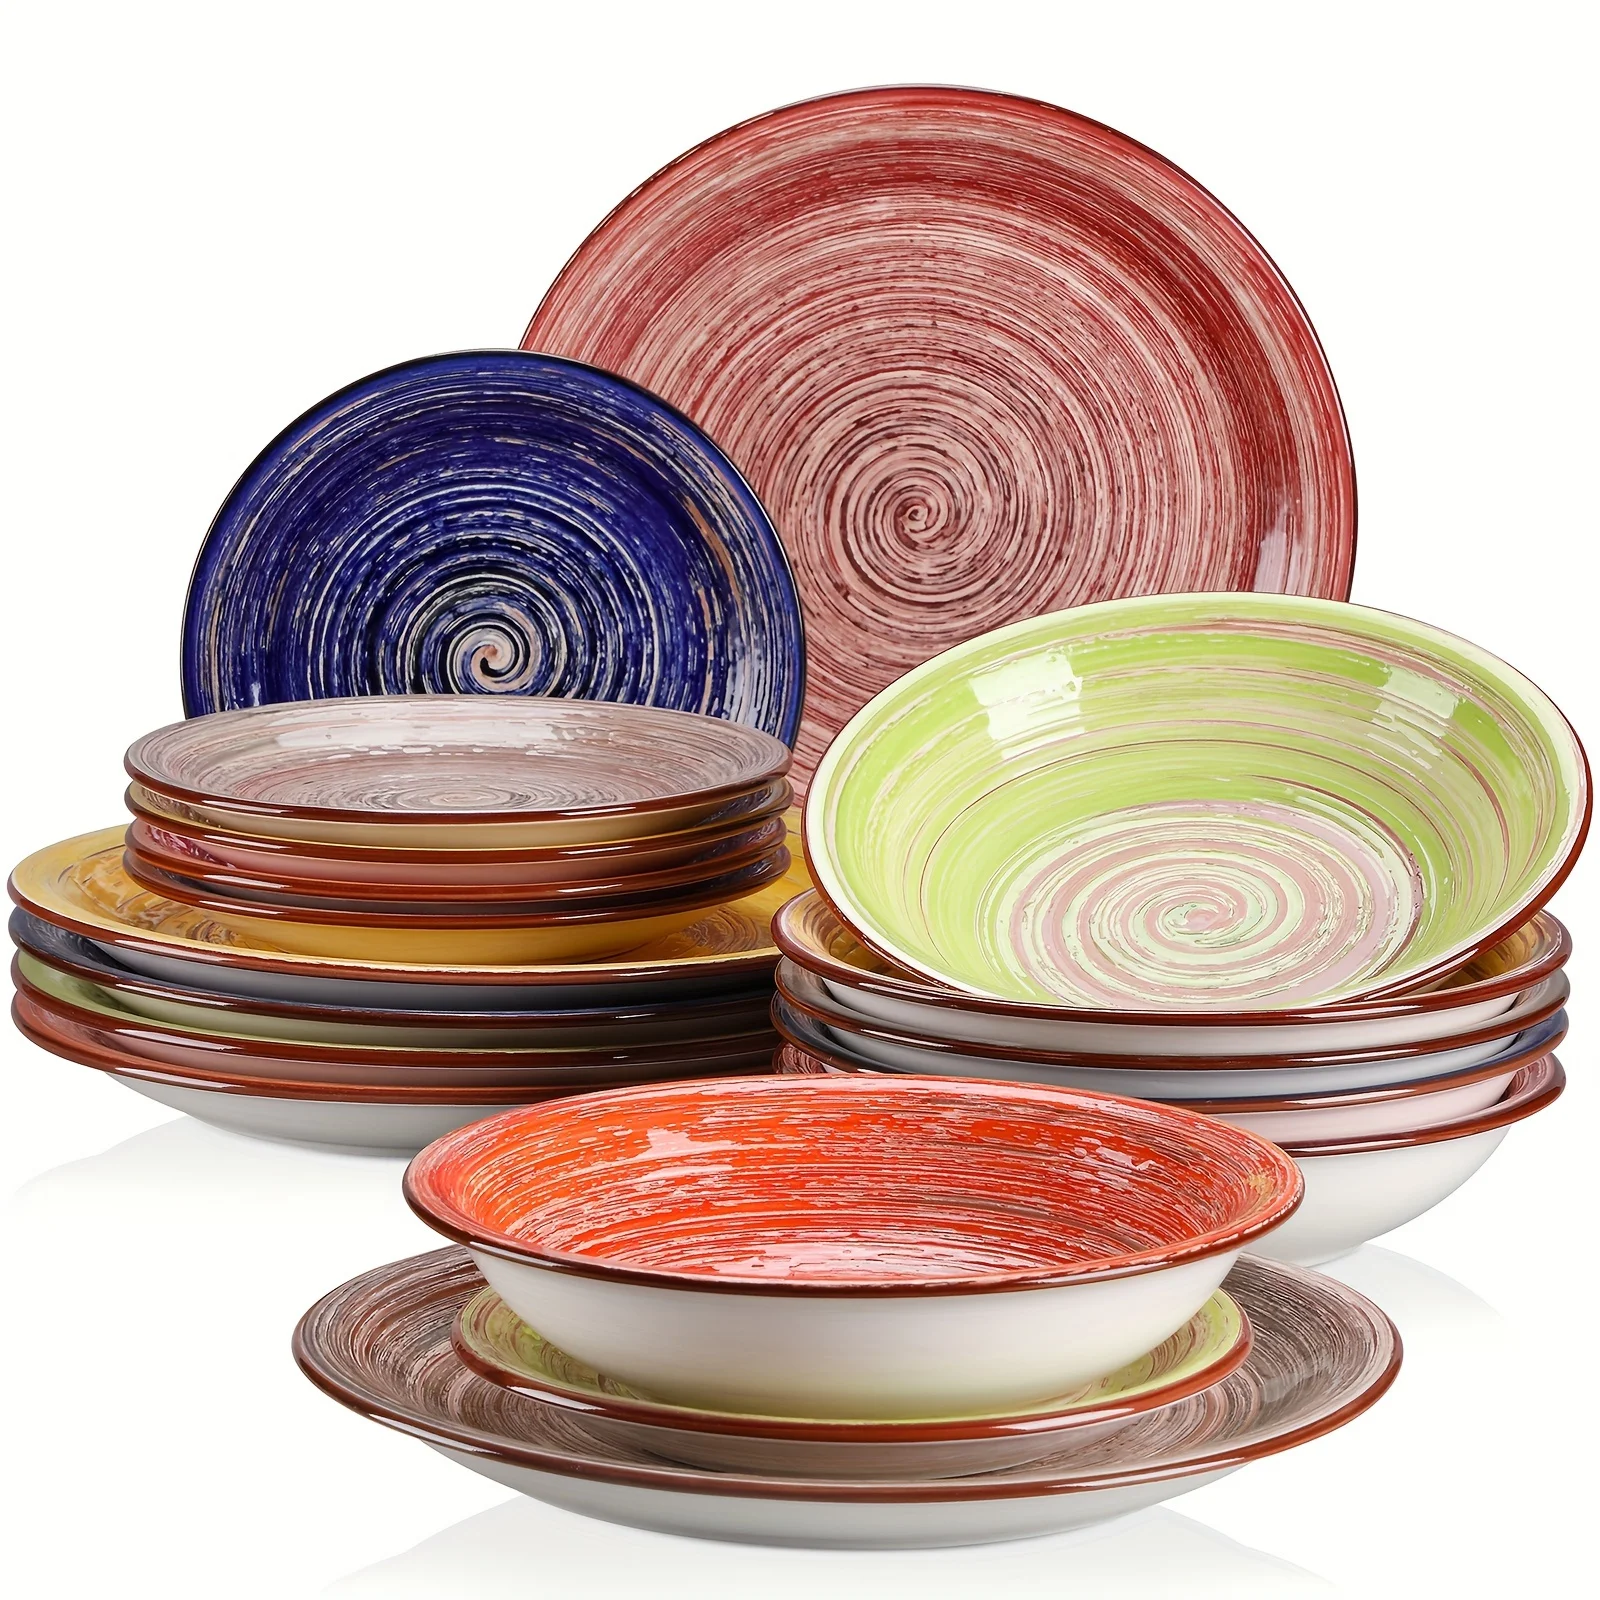 

18 Piece Dinnerware Set Stoneware Tableware Plate Bowl Service for 6 Plastic plates reusable Plate Chopstick set White plates Ti